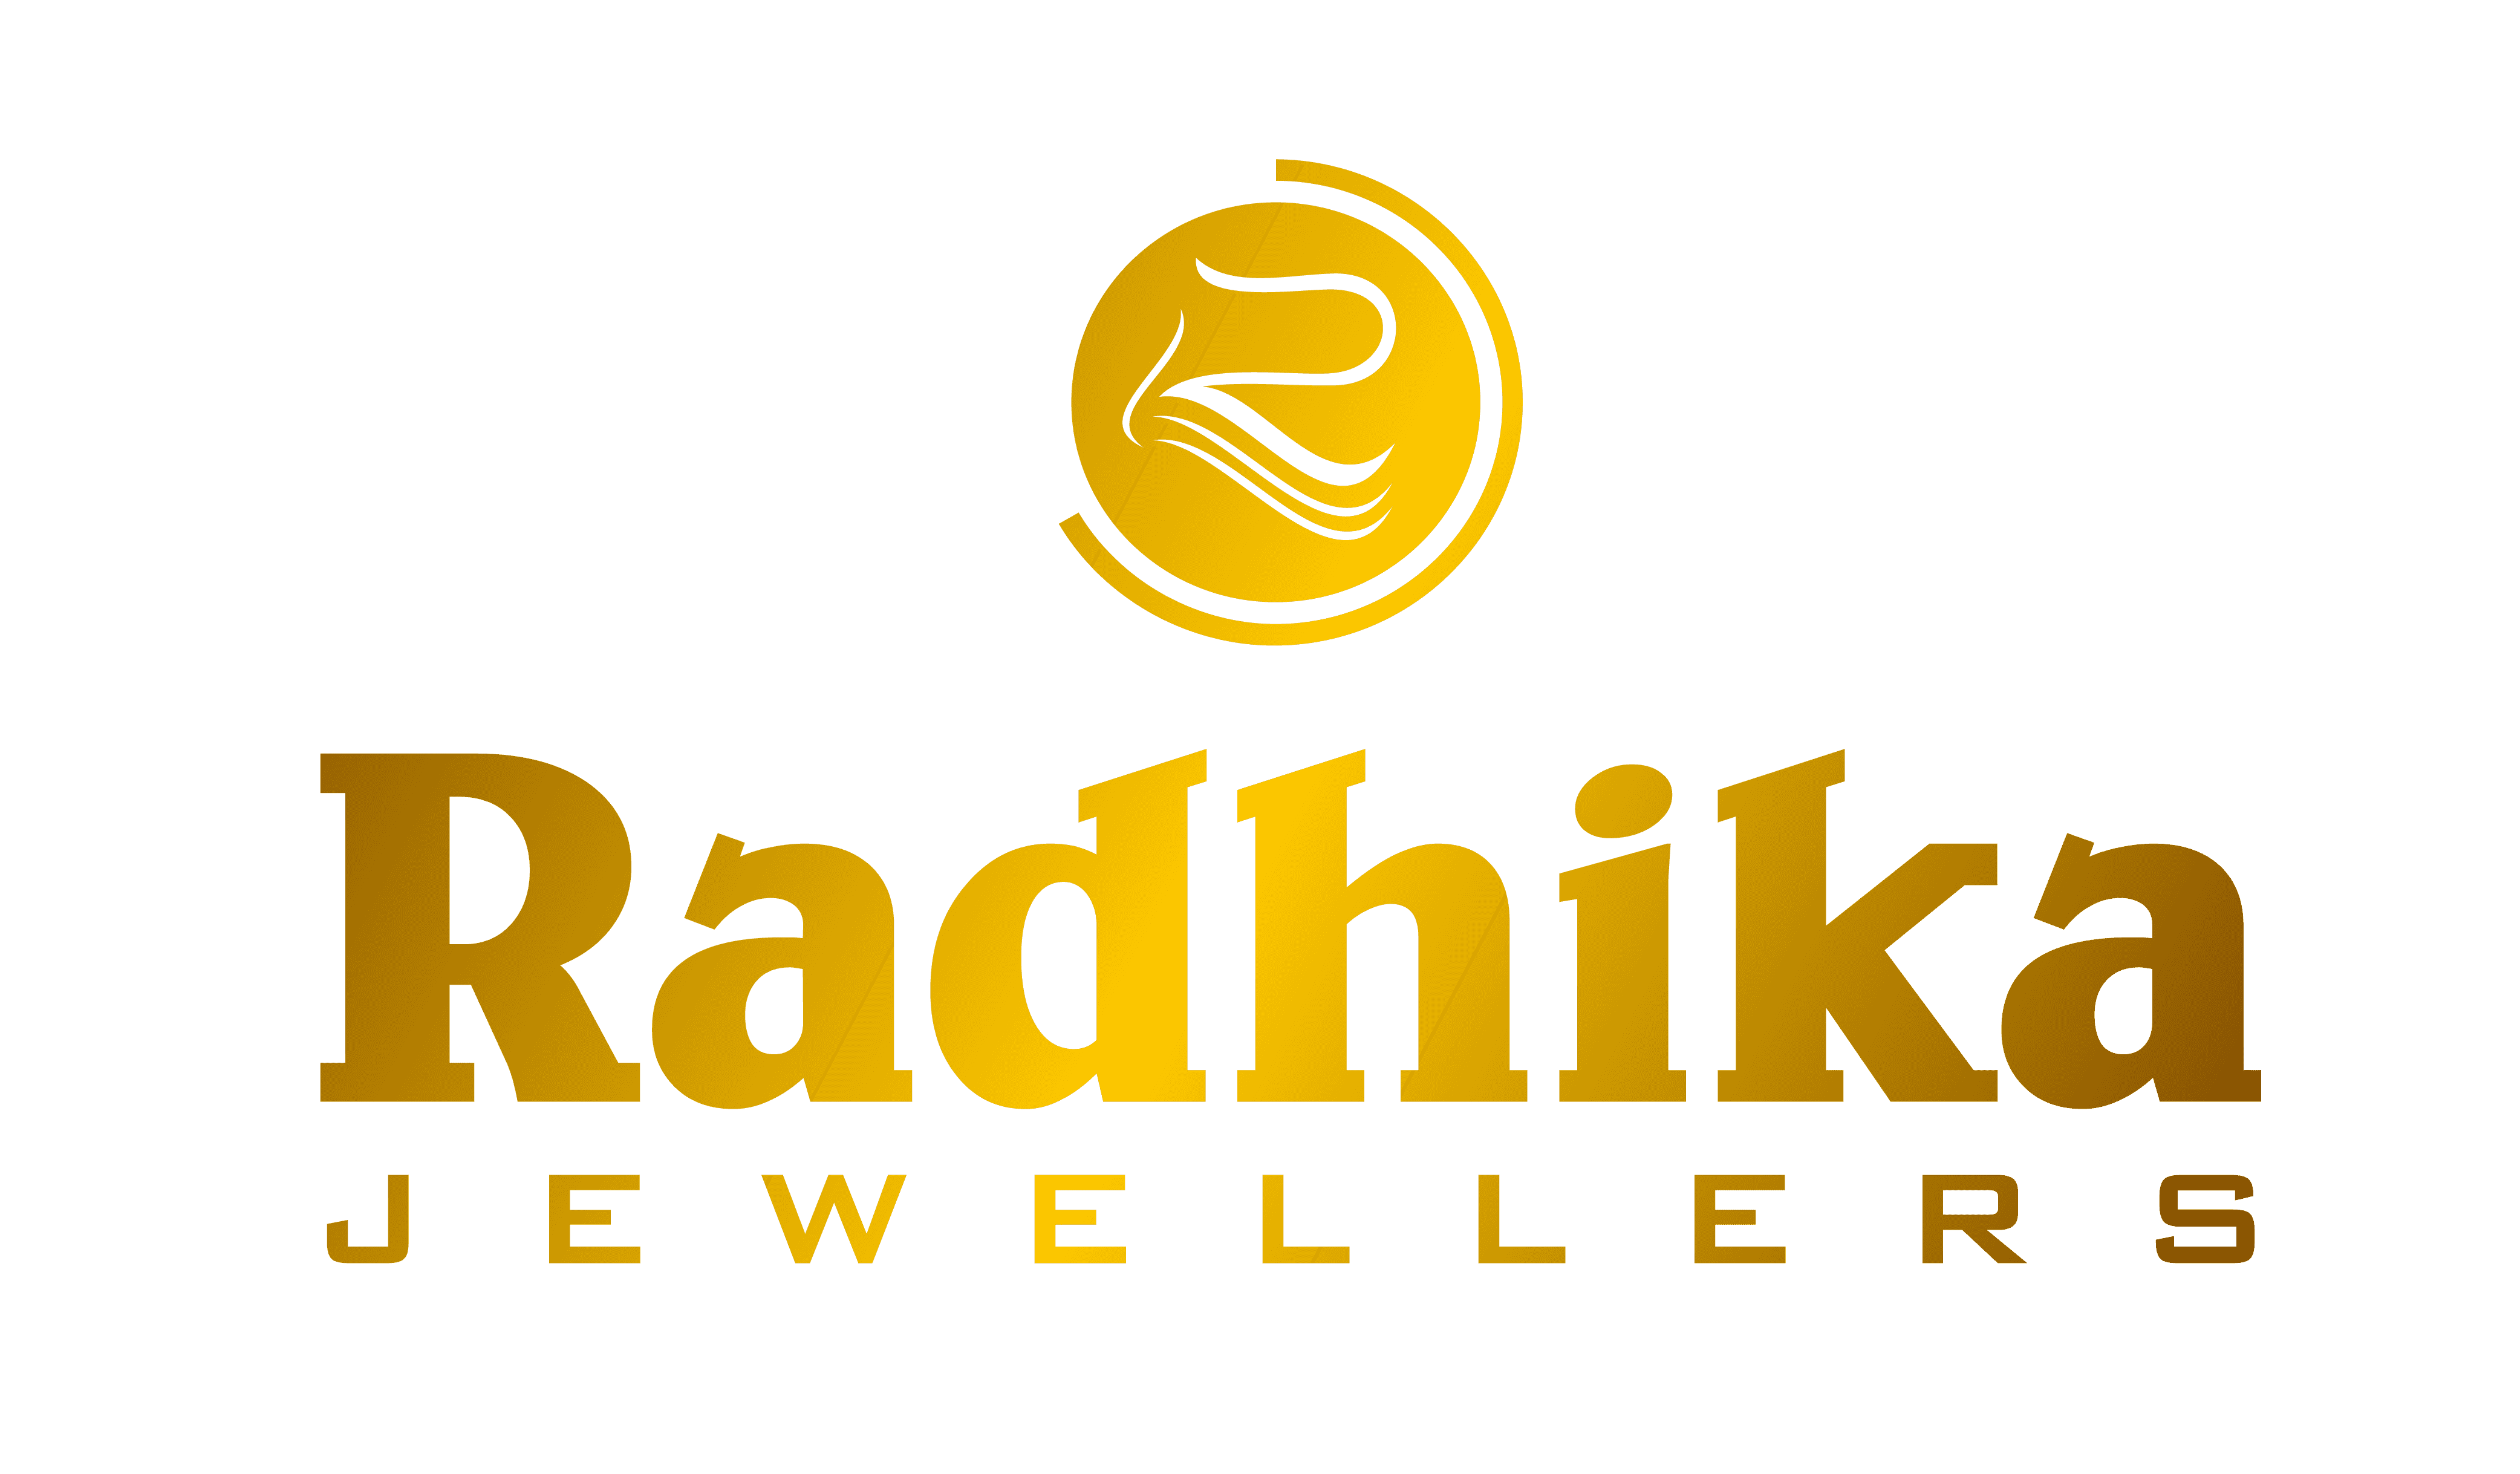 Radhika Jewles Old logo